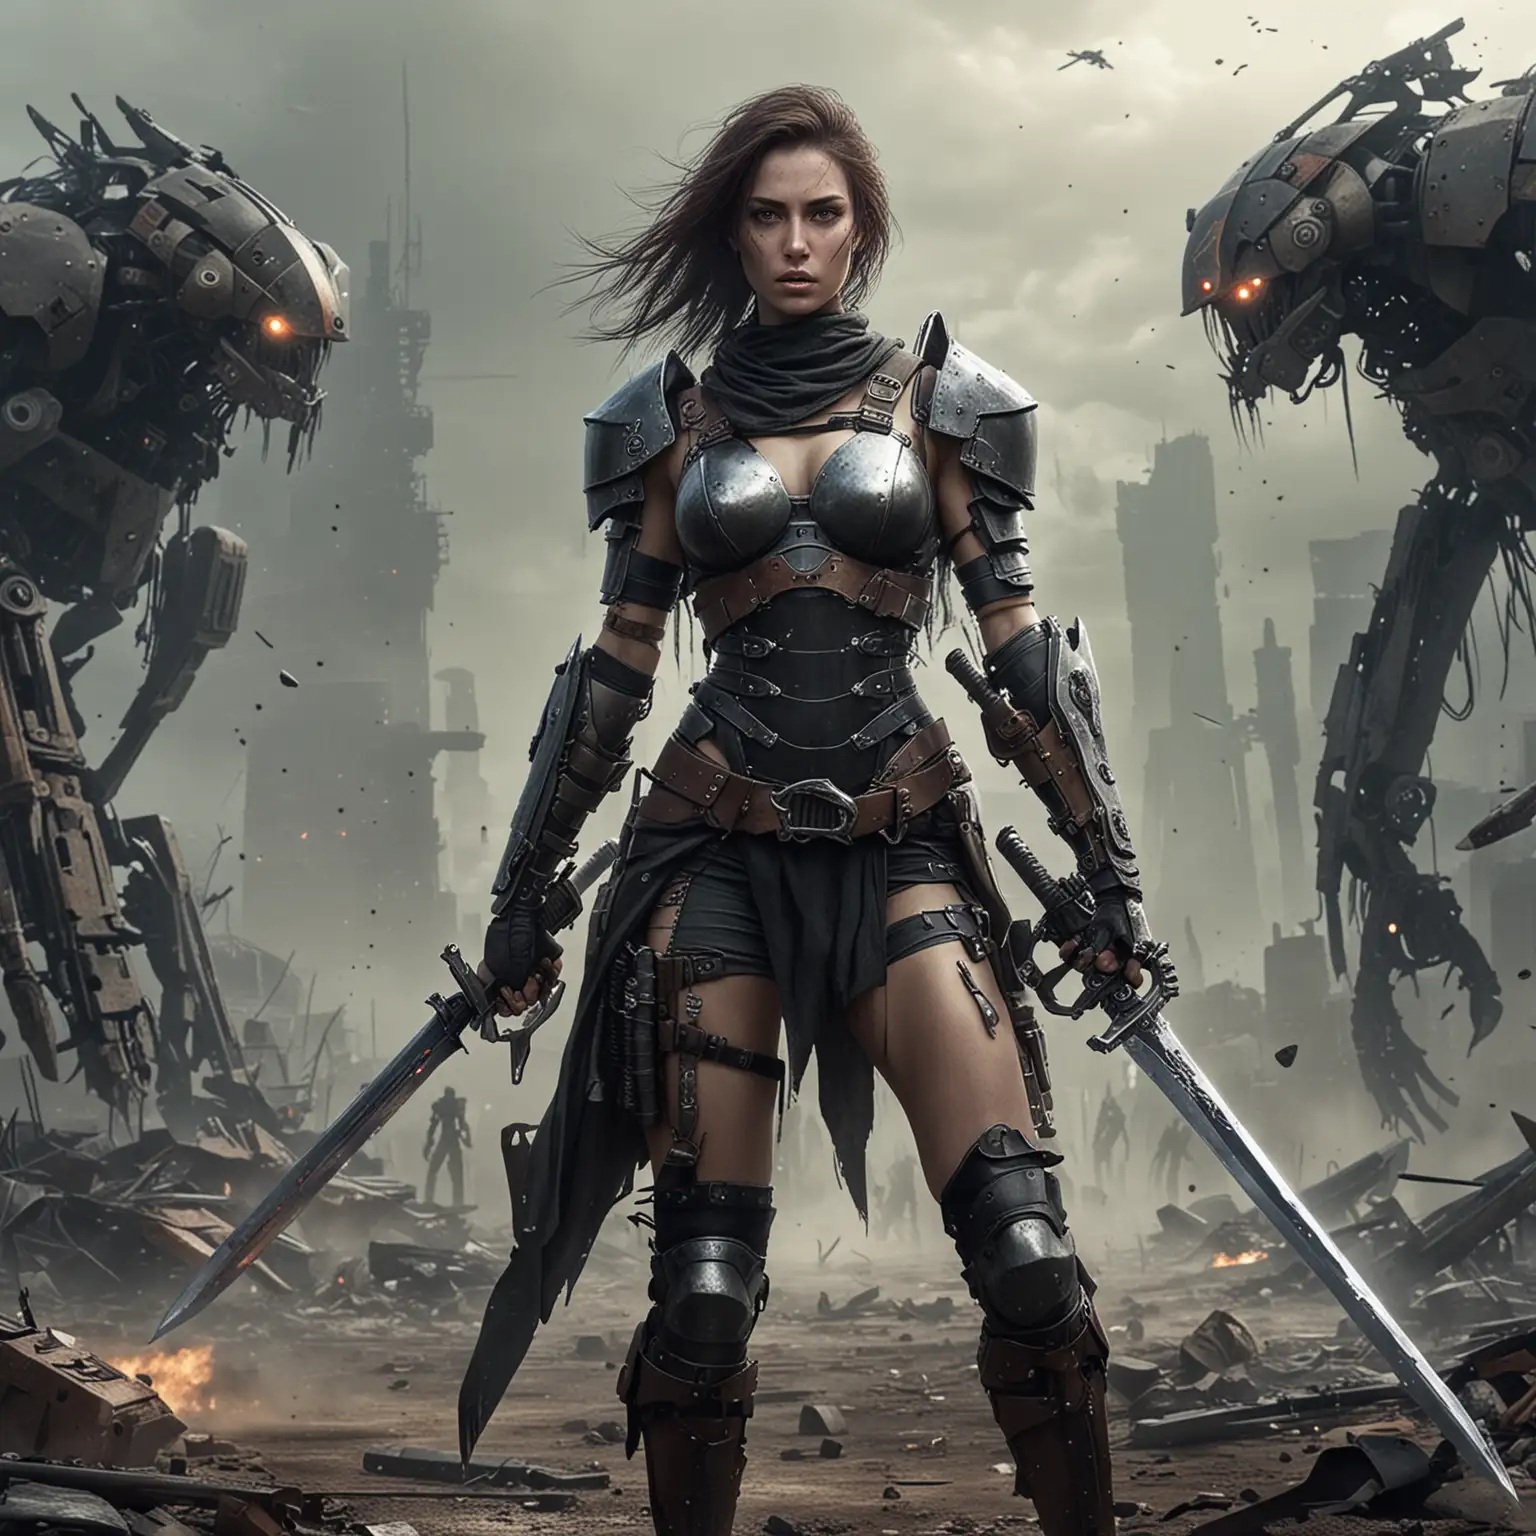 PostApocalyptic Battle Scene with SwordWielding Woman and Robots